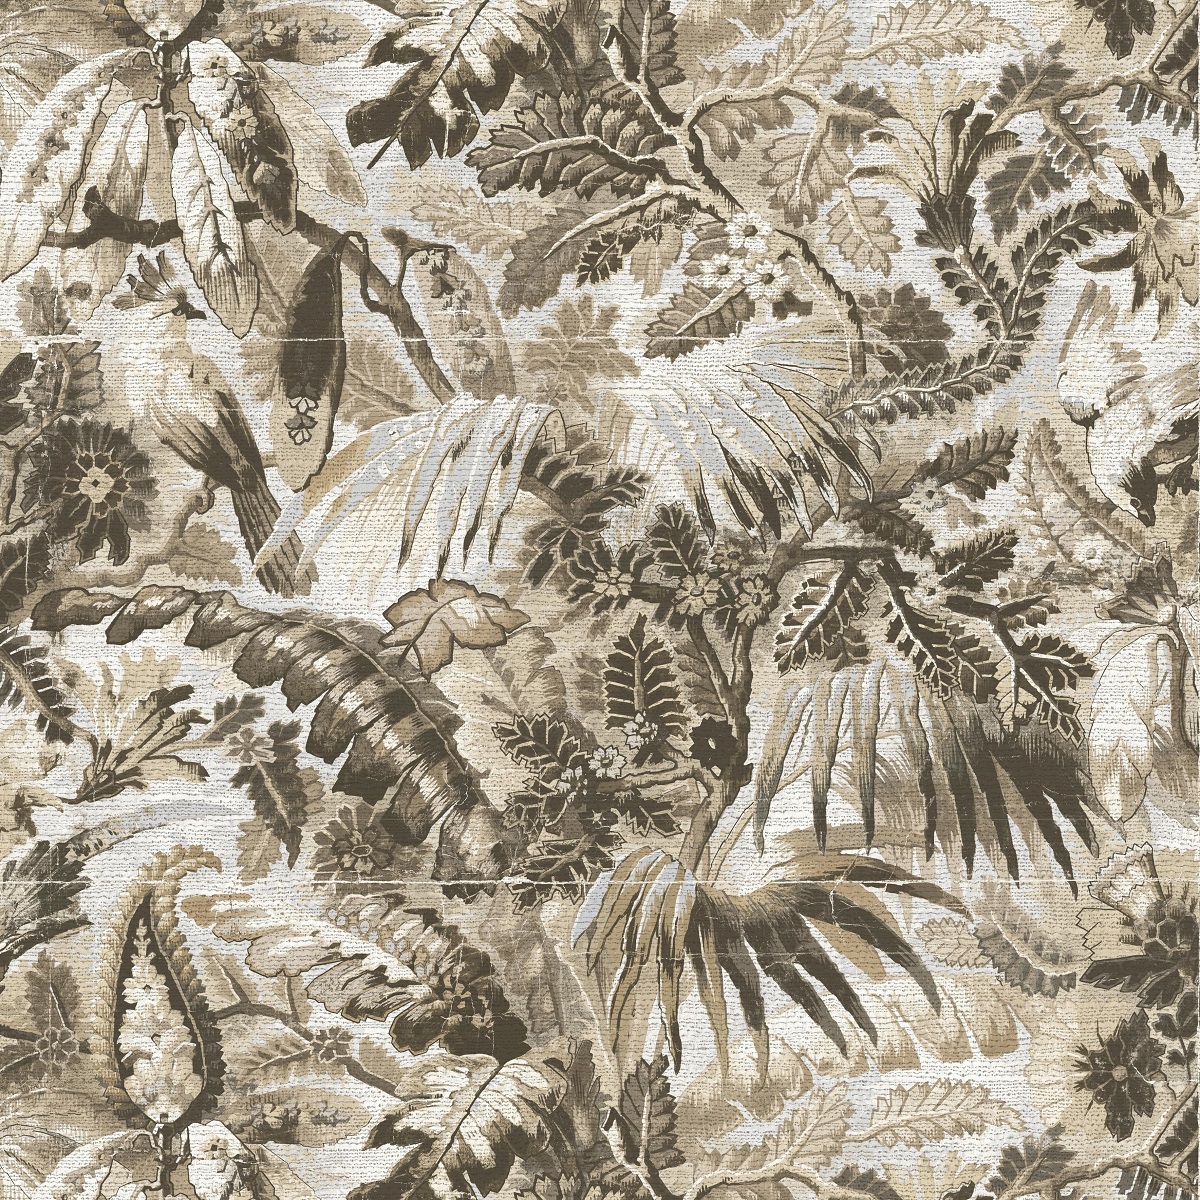 detail of texture and design of Arte Antigua Tropicali